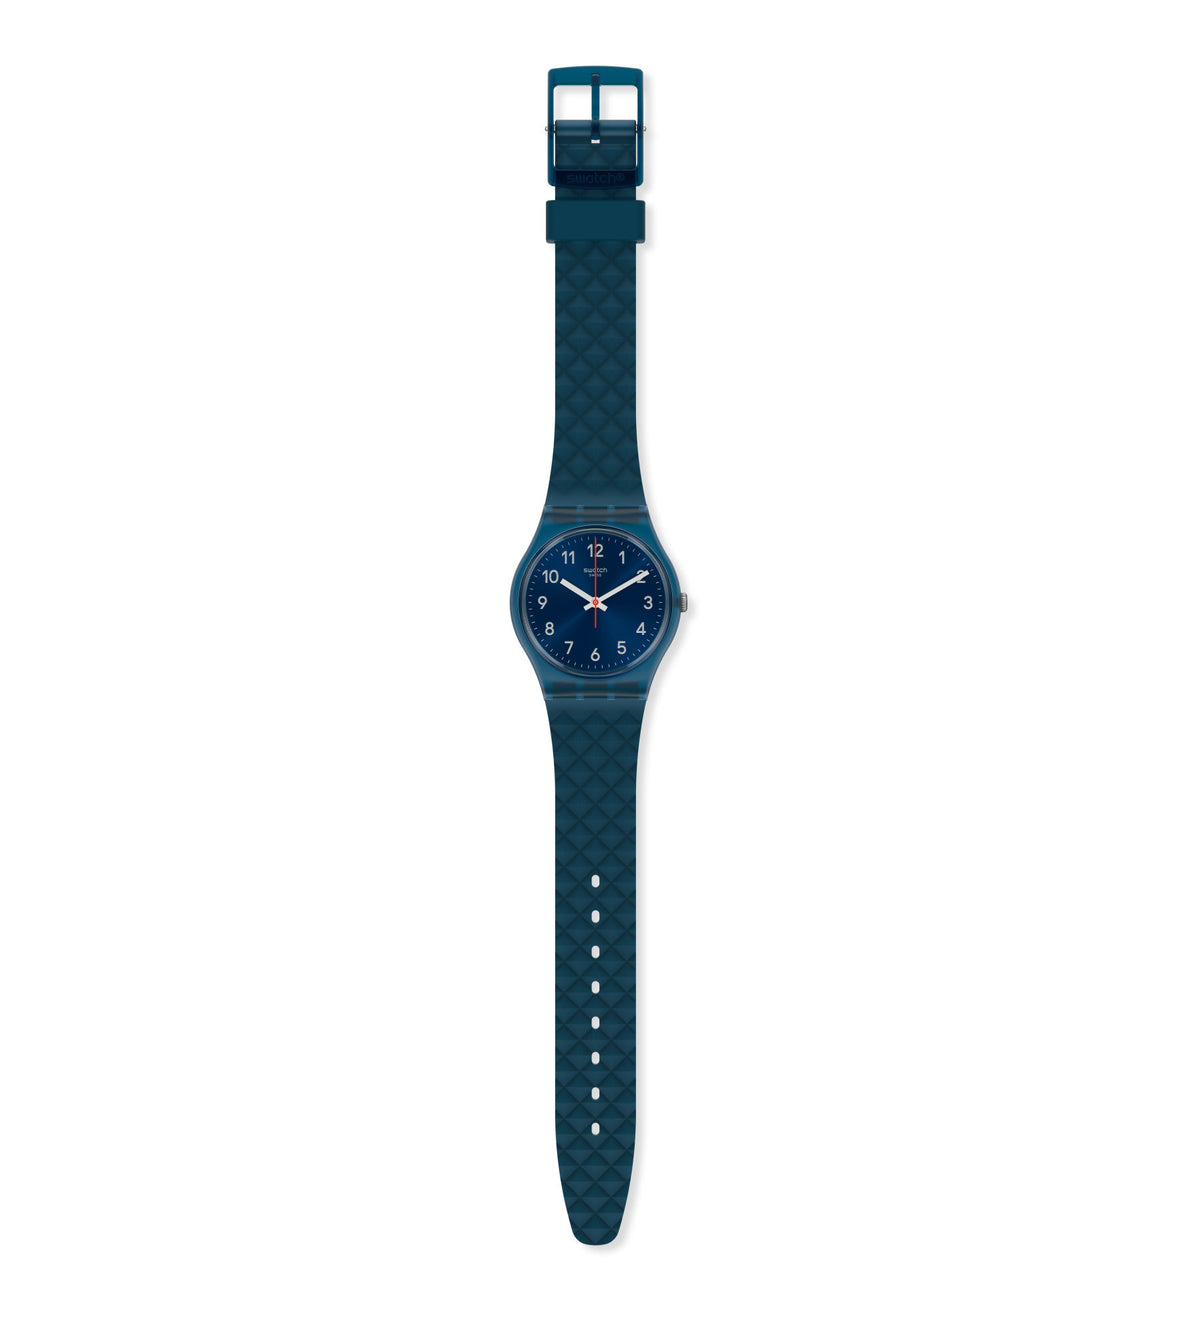 Swatch Watch 34mm - Blunel